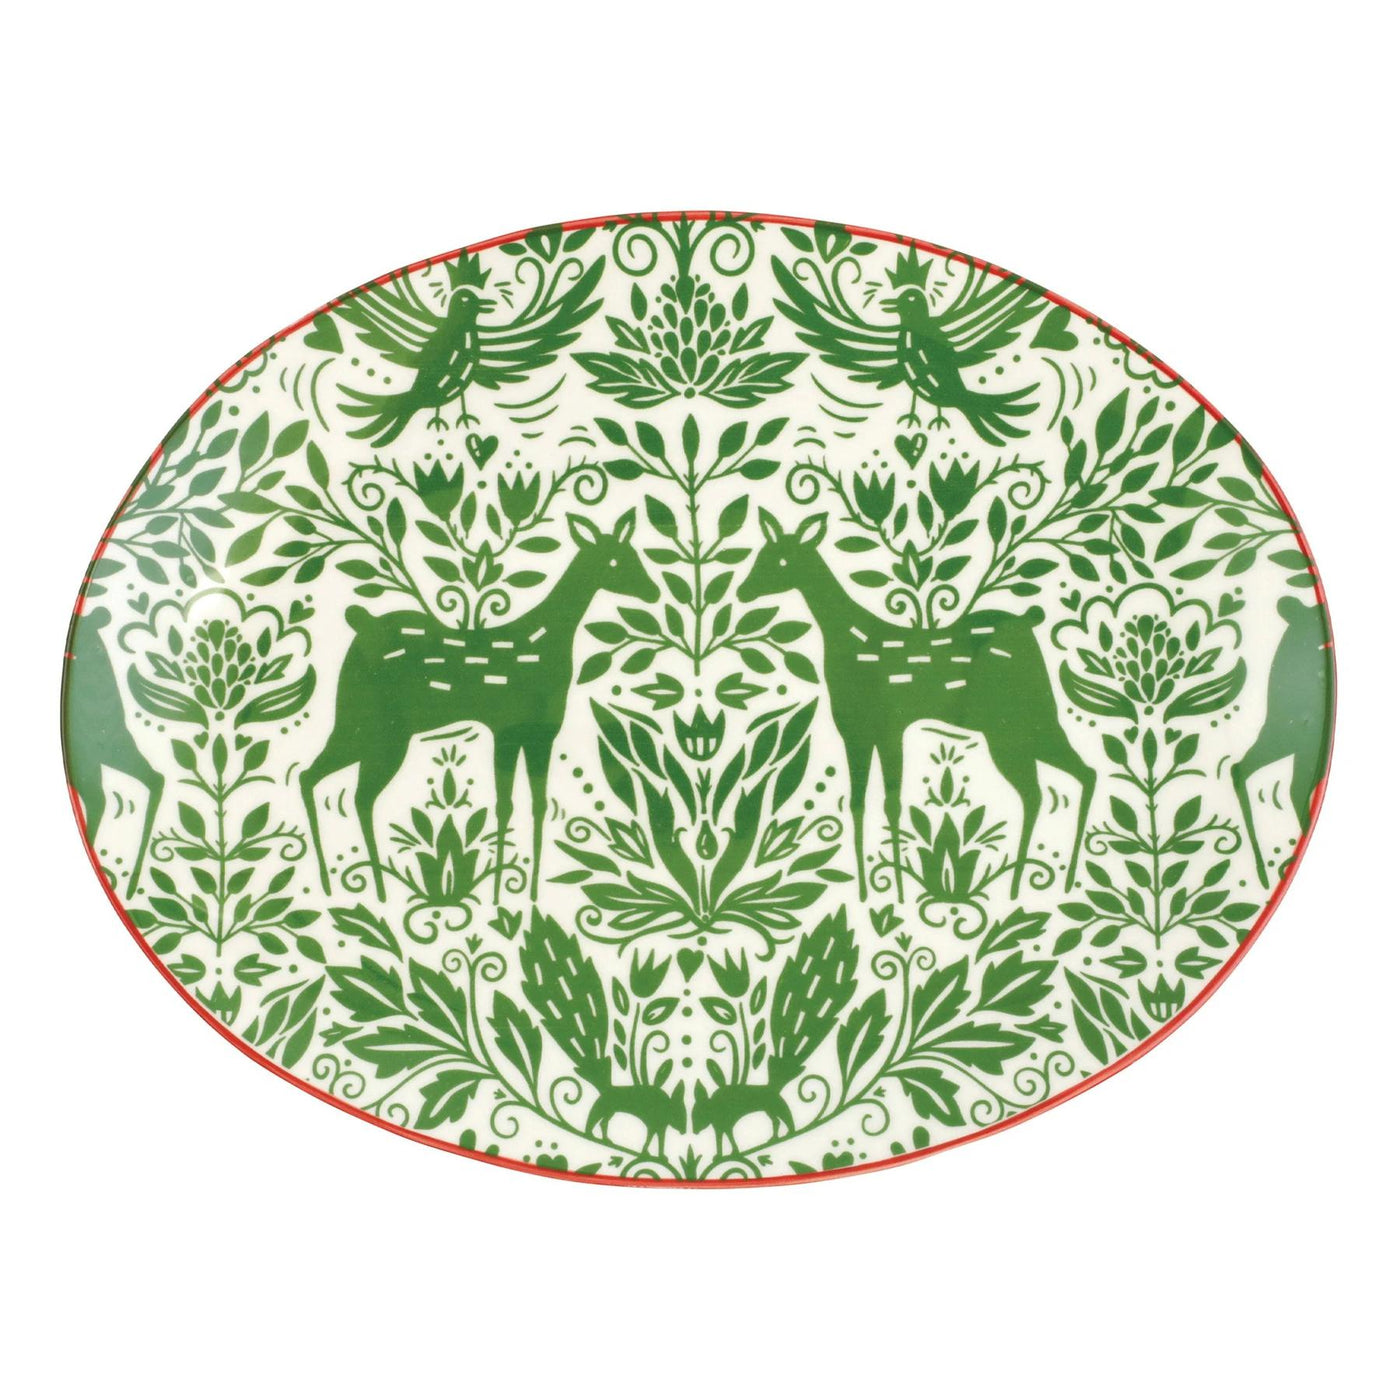 Vietri Mistletoe Oval Platter-HOME/GIFTWARE-Kevin's Fine Outdoor Gear & Apparel